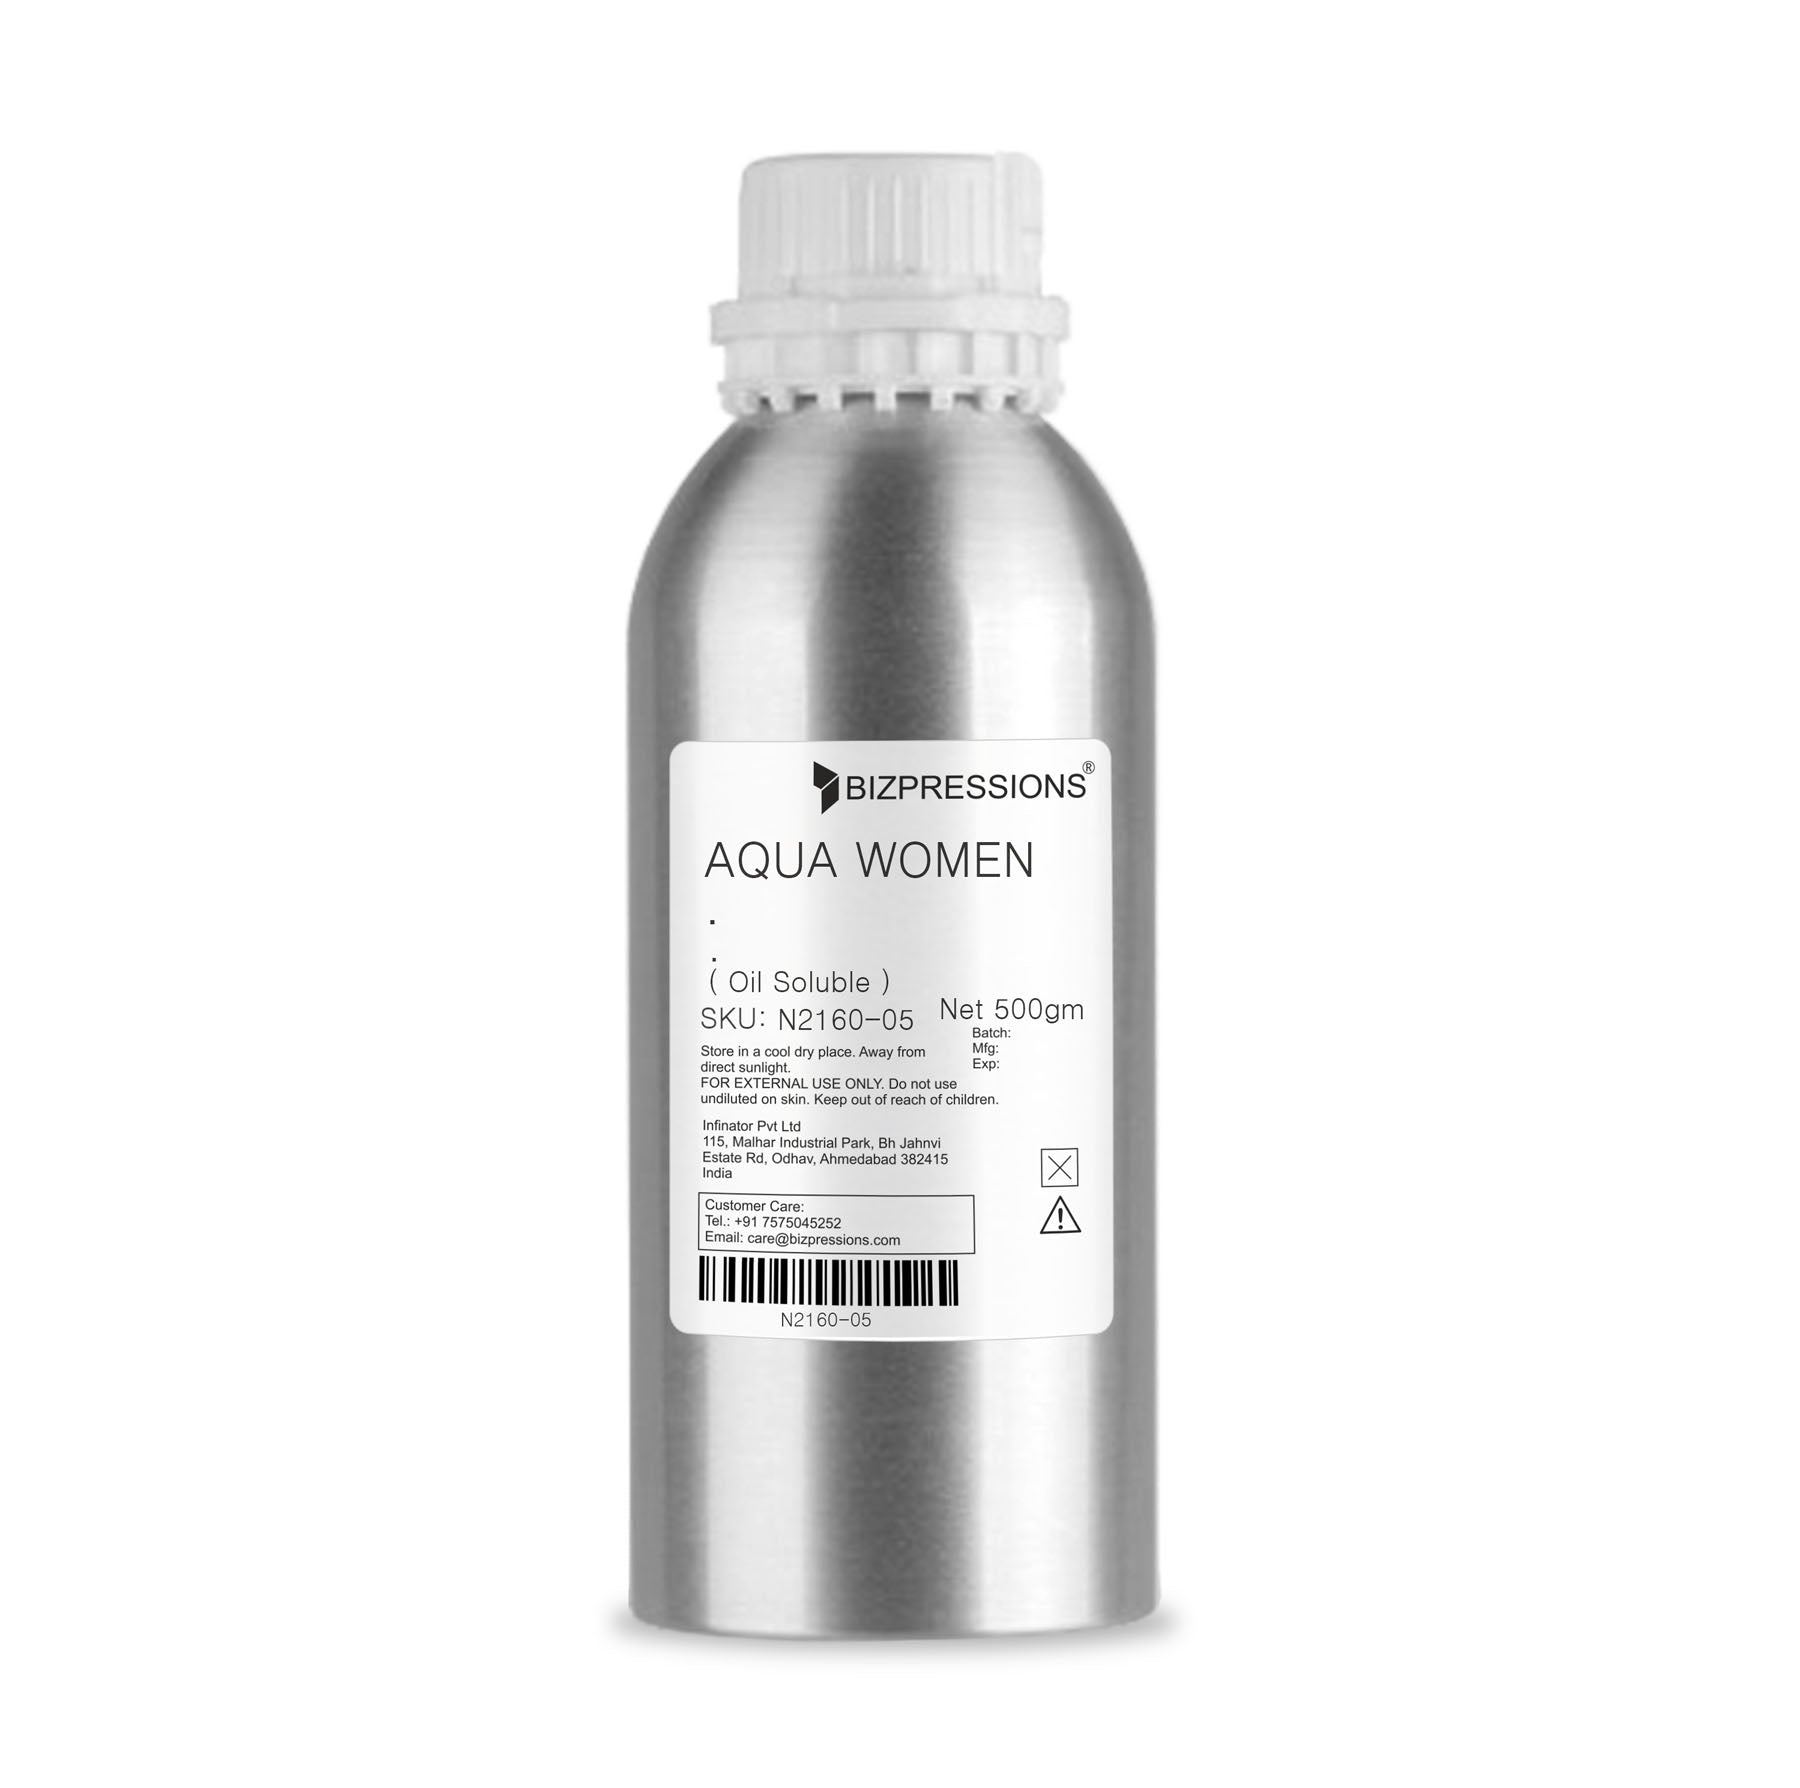 AQUA WOMEN - Fragrance ( Oil Soluble ) - 500 gm